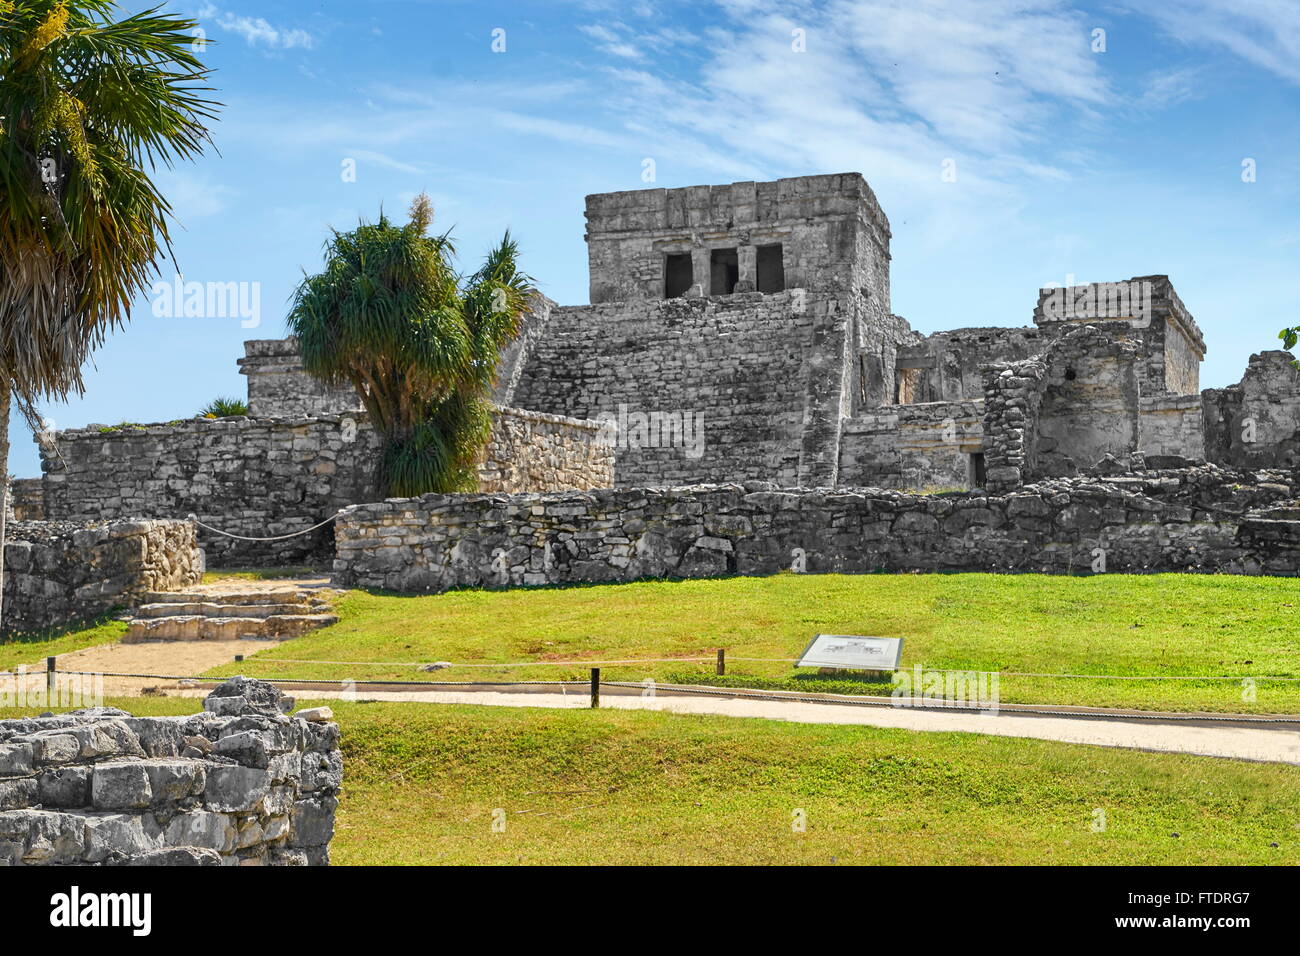 Alte Maya-Ruinen, Haupttempel von Tulum, Halbinsel Yucatan, Mexiko Stockfoto